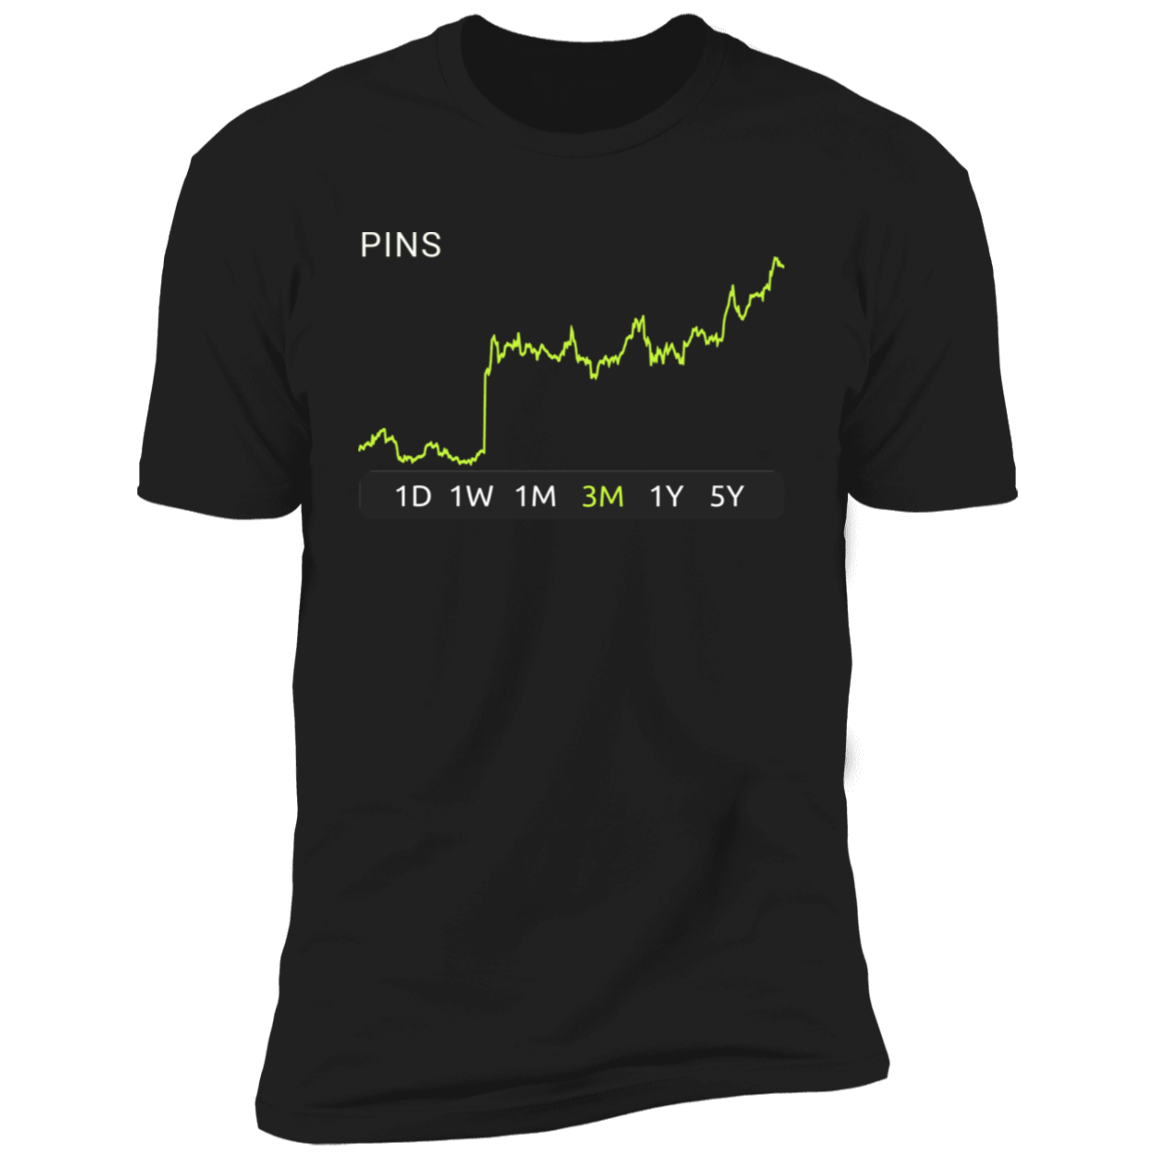 PINS Stock 3m Premium T-Shirt